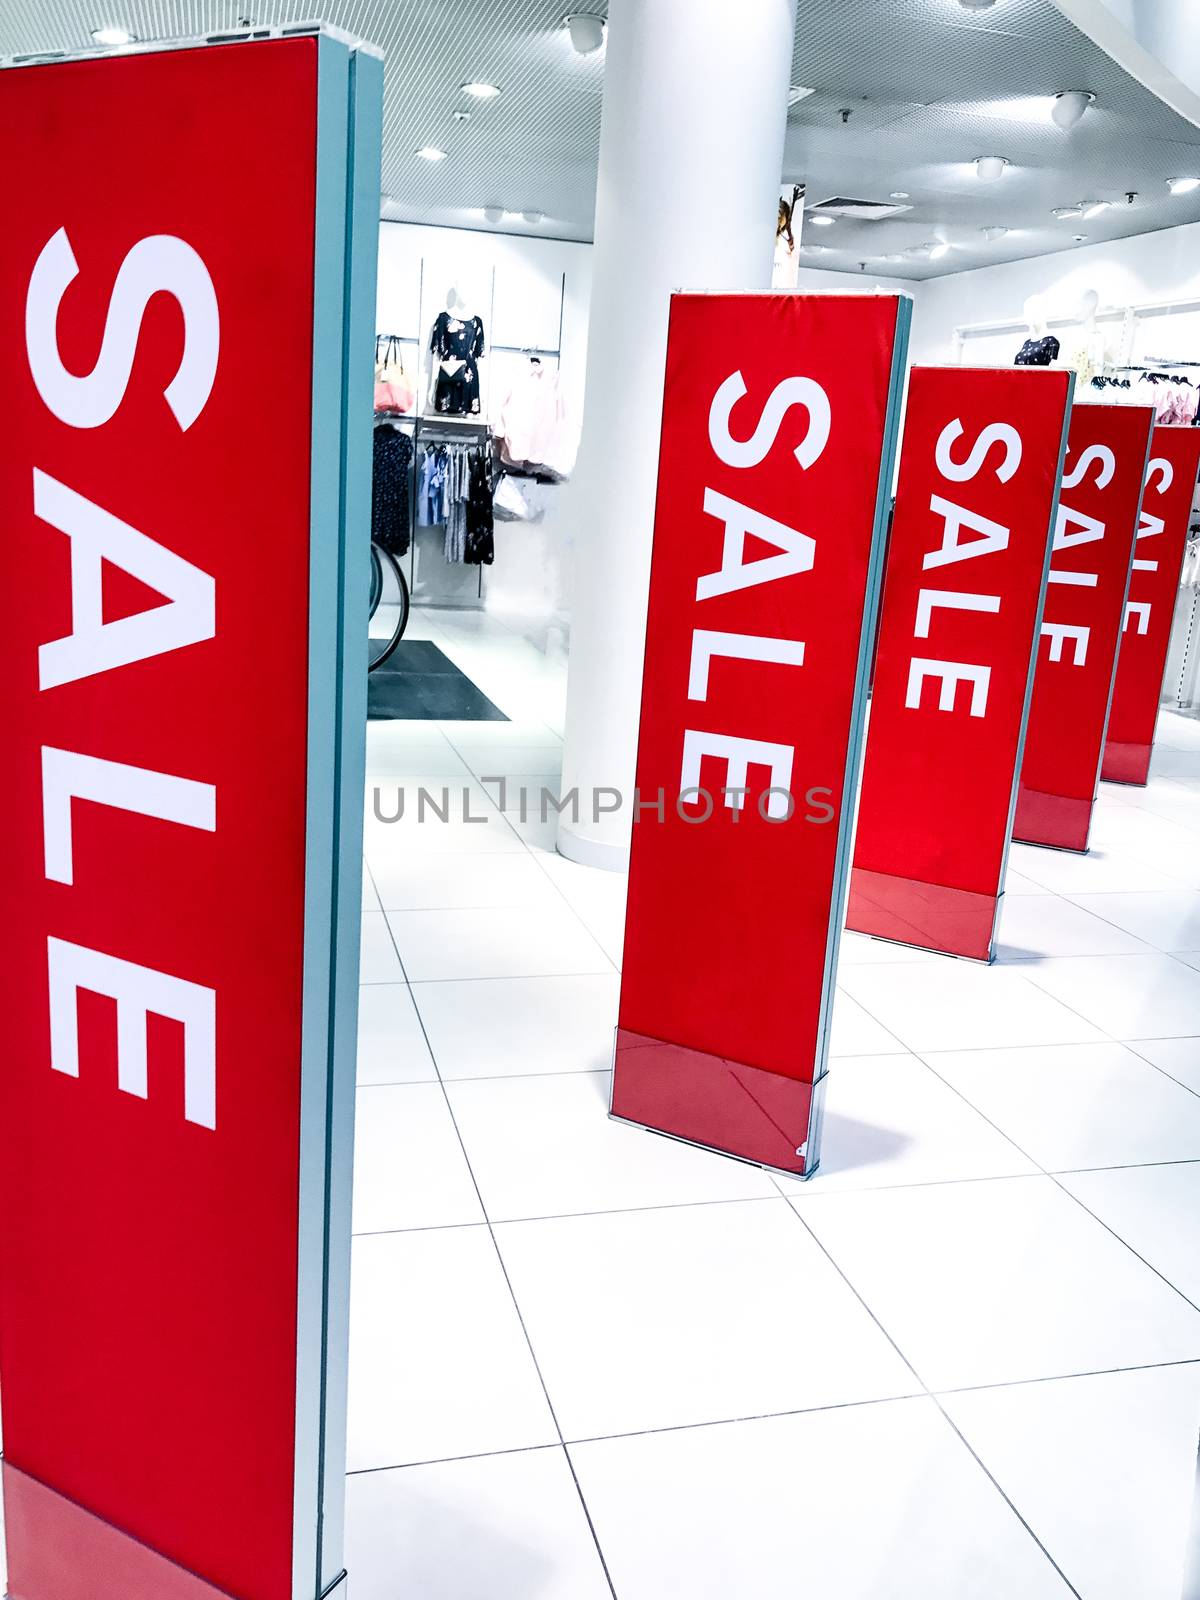 Sale shopping season promotion by Softulka